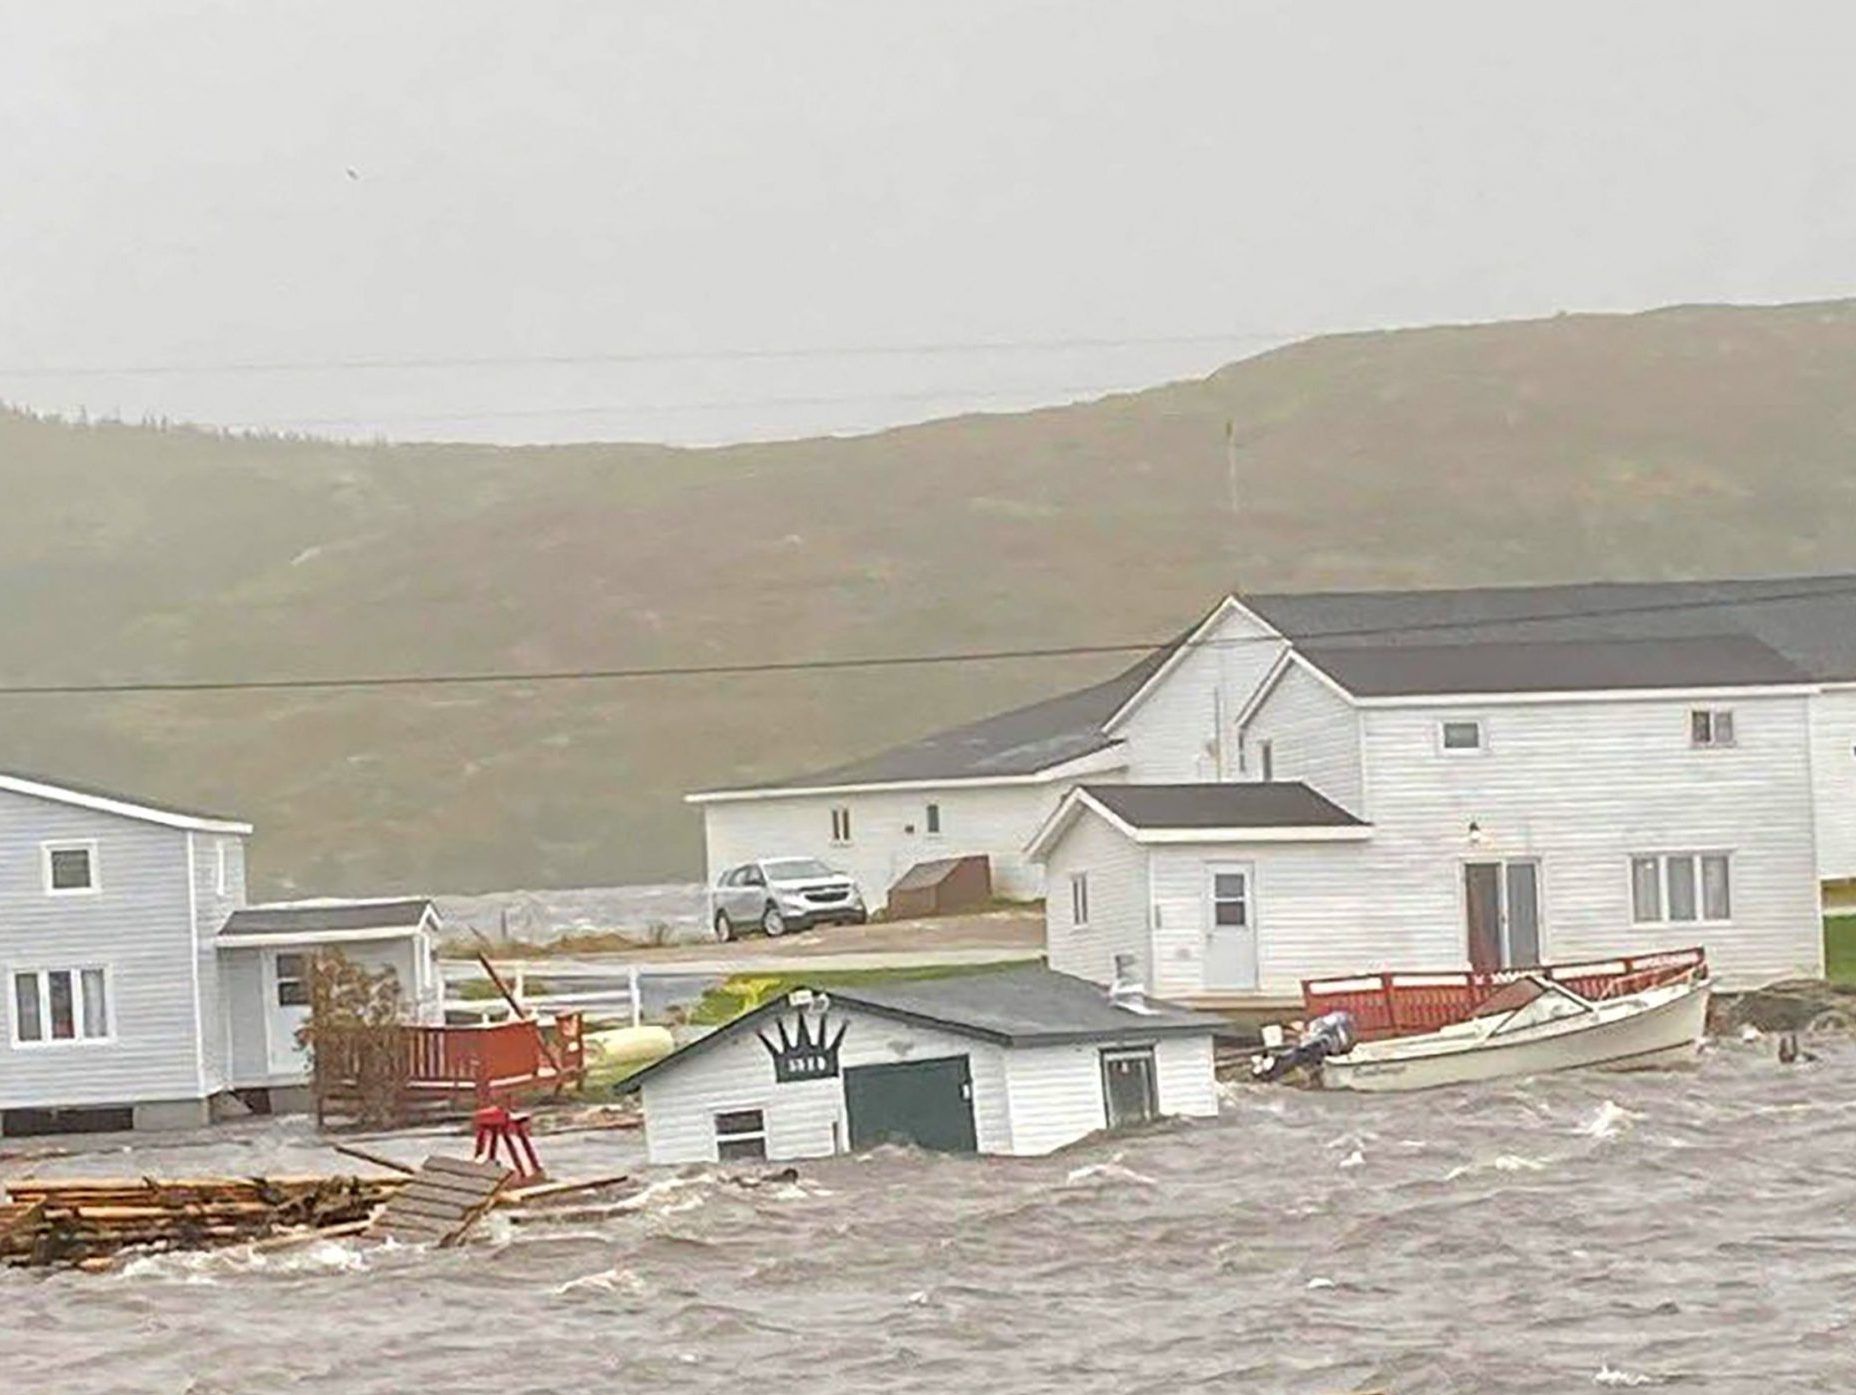 Fiona washes away homes in Newfoundland as storm wreaks havoc across Atlantic region